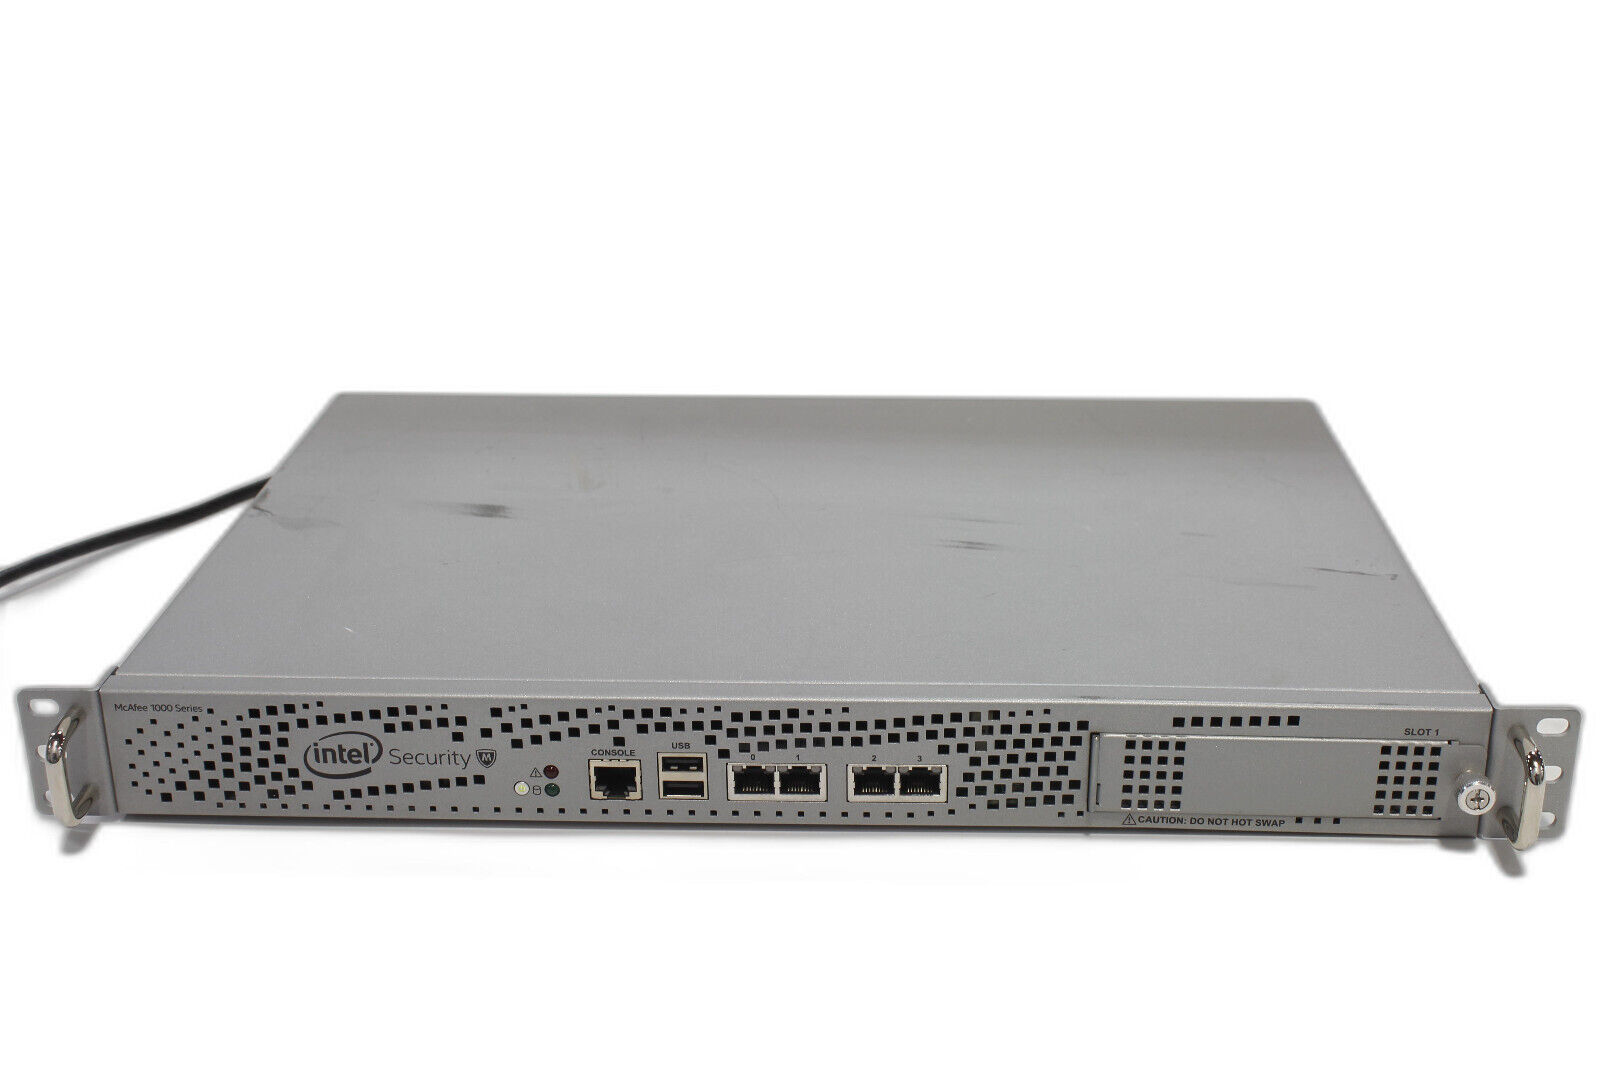 Intel McAfee 1000 Series 1035-C1 4-Port Gigabit Network Security Firewall